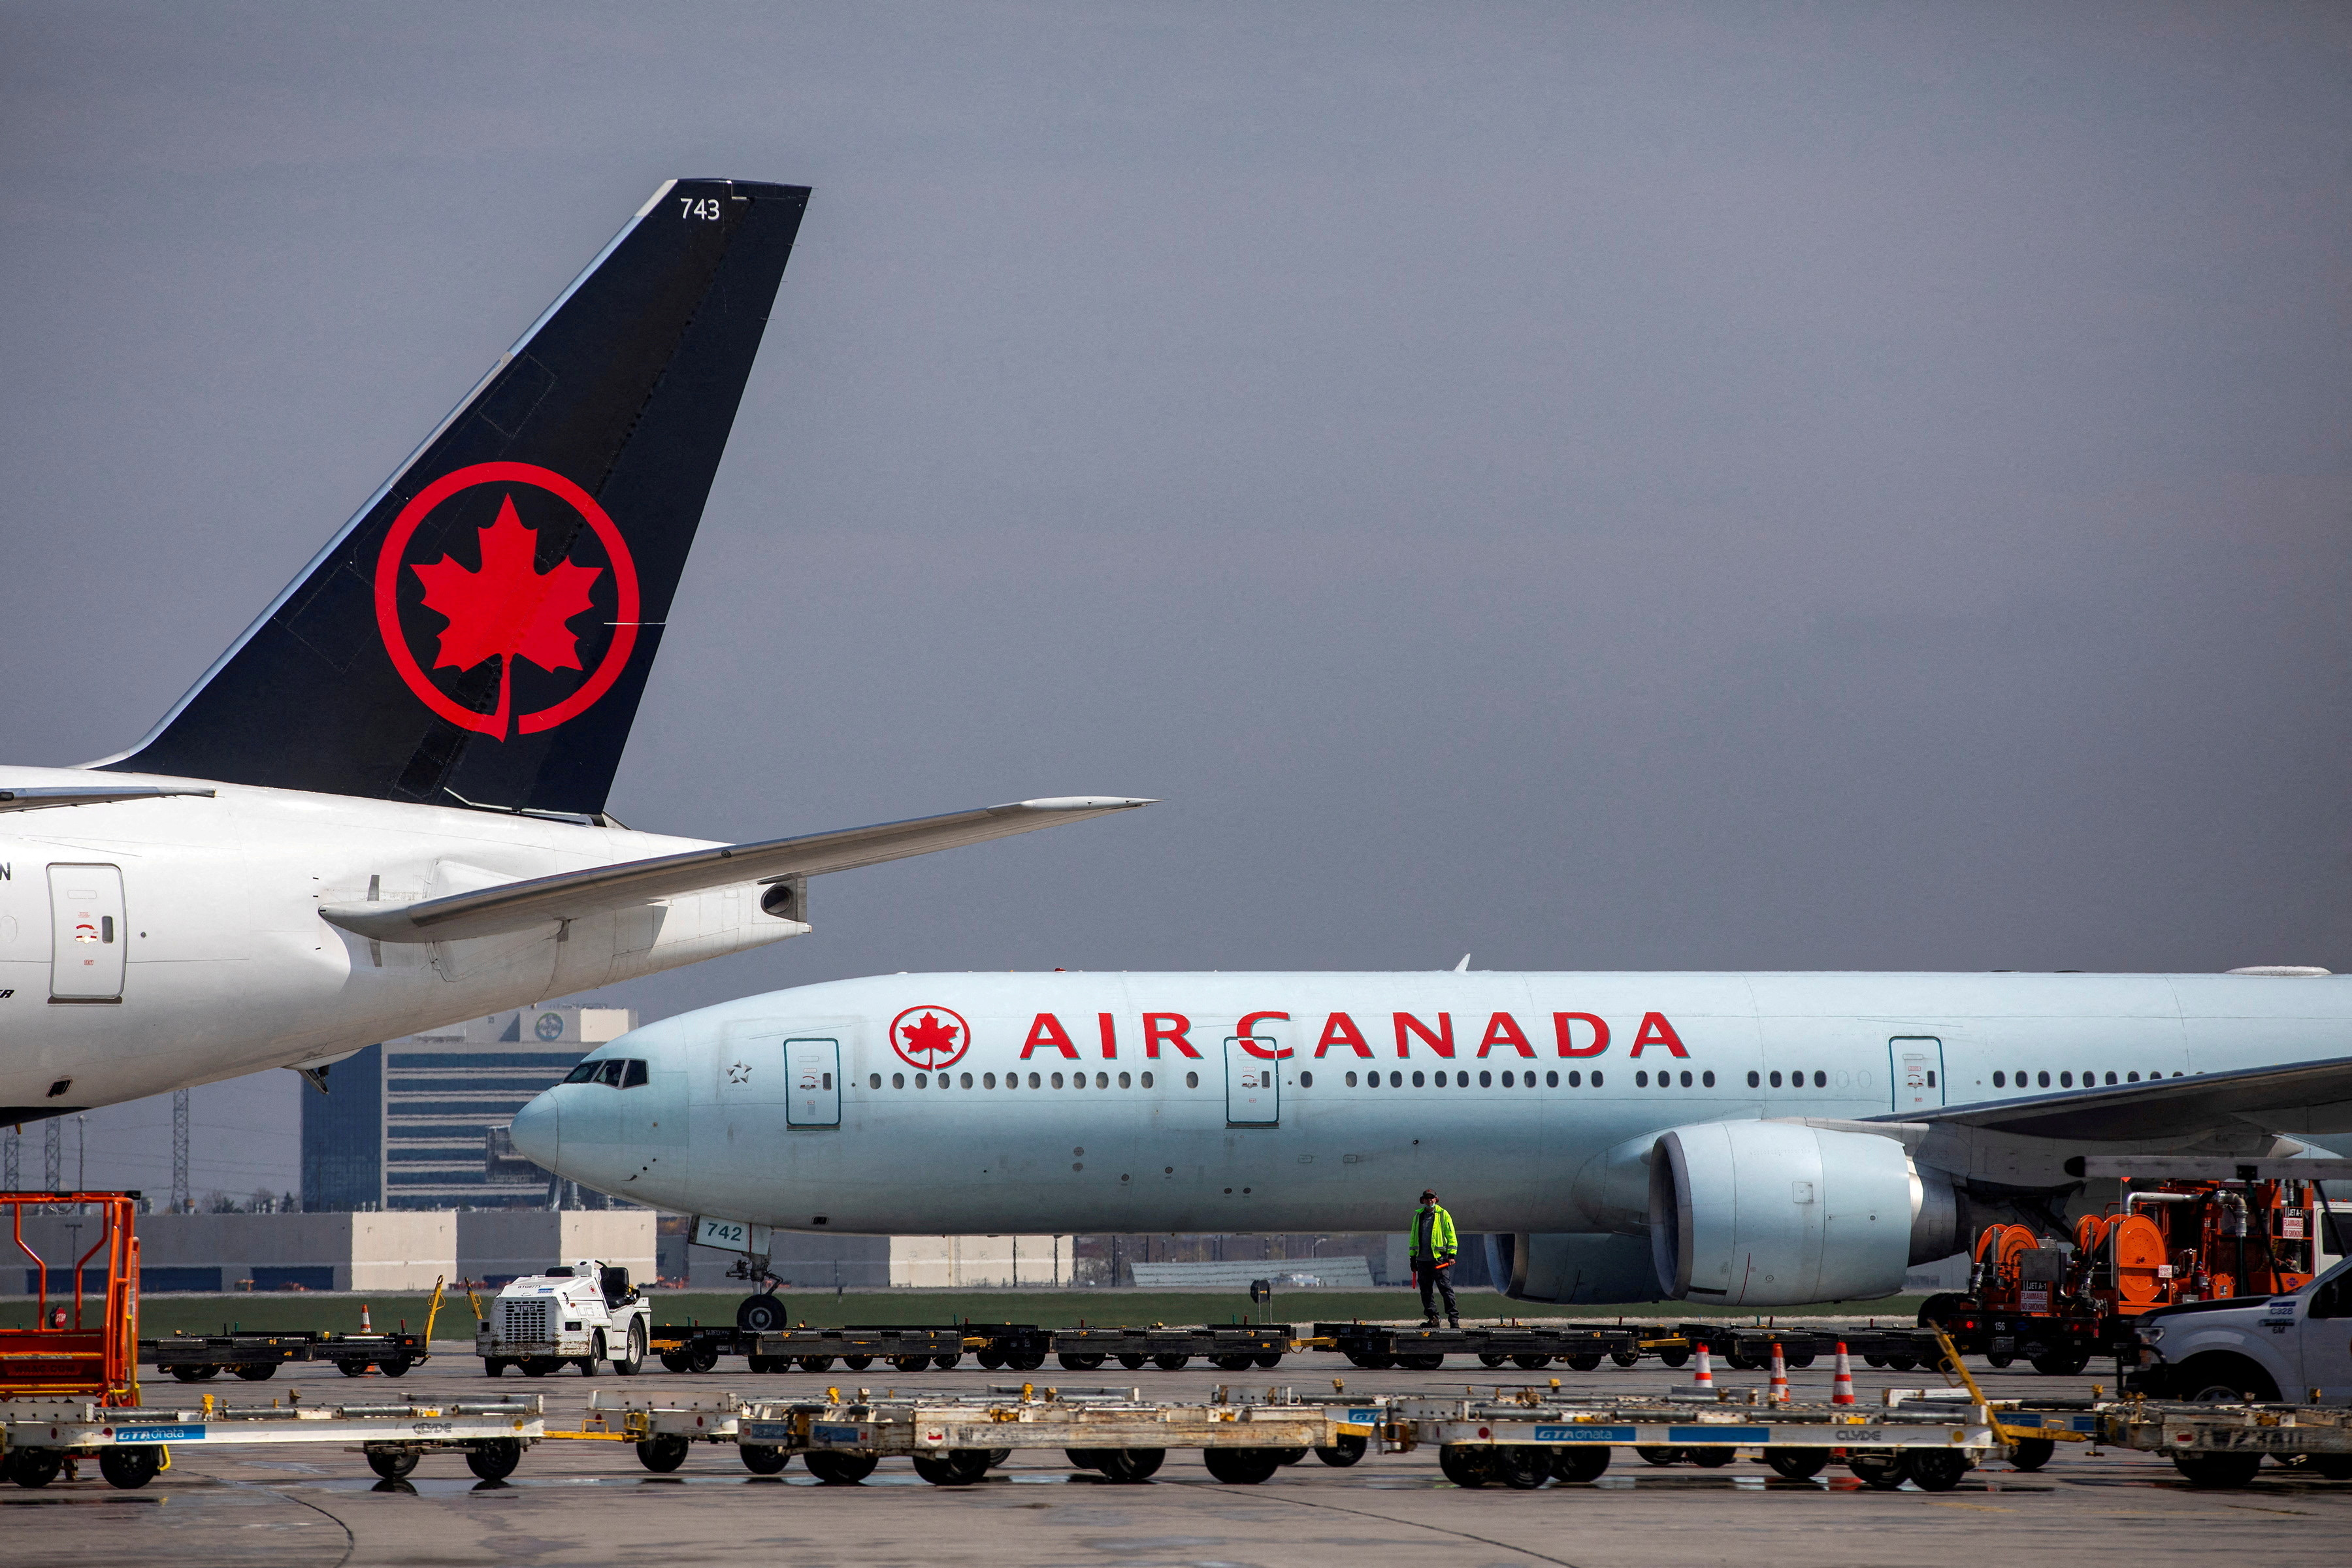 Air Canada lifts profit forecast on international travel rebound